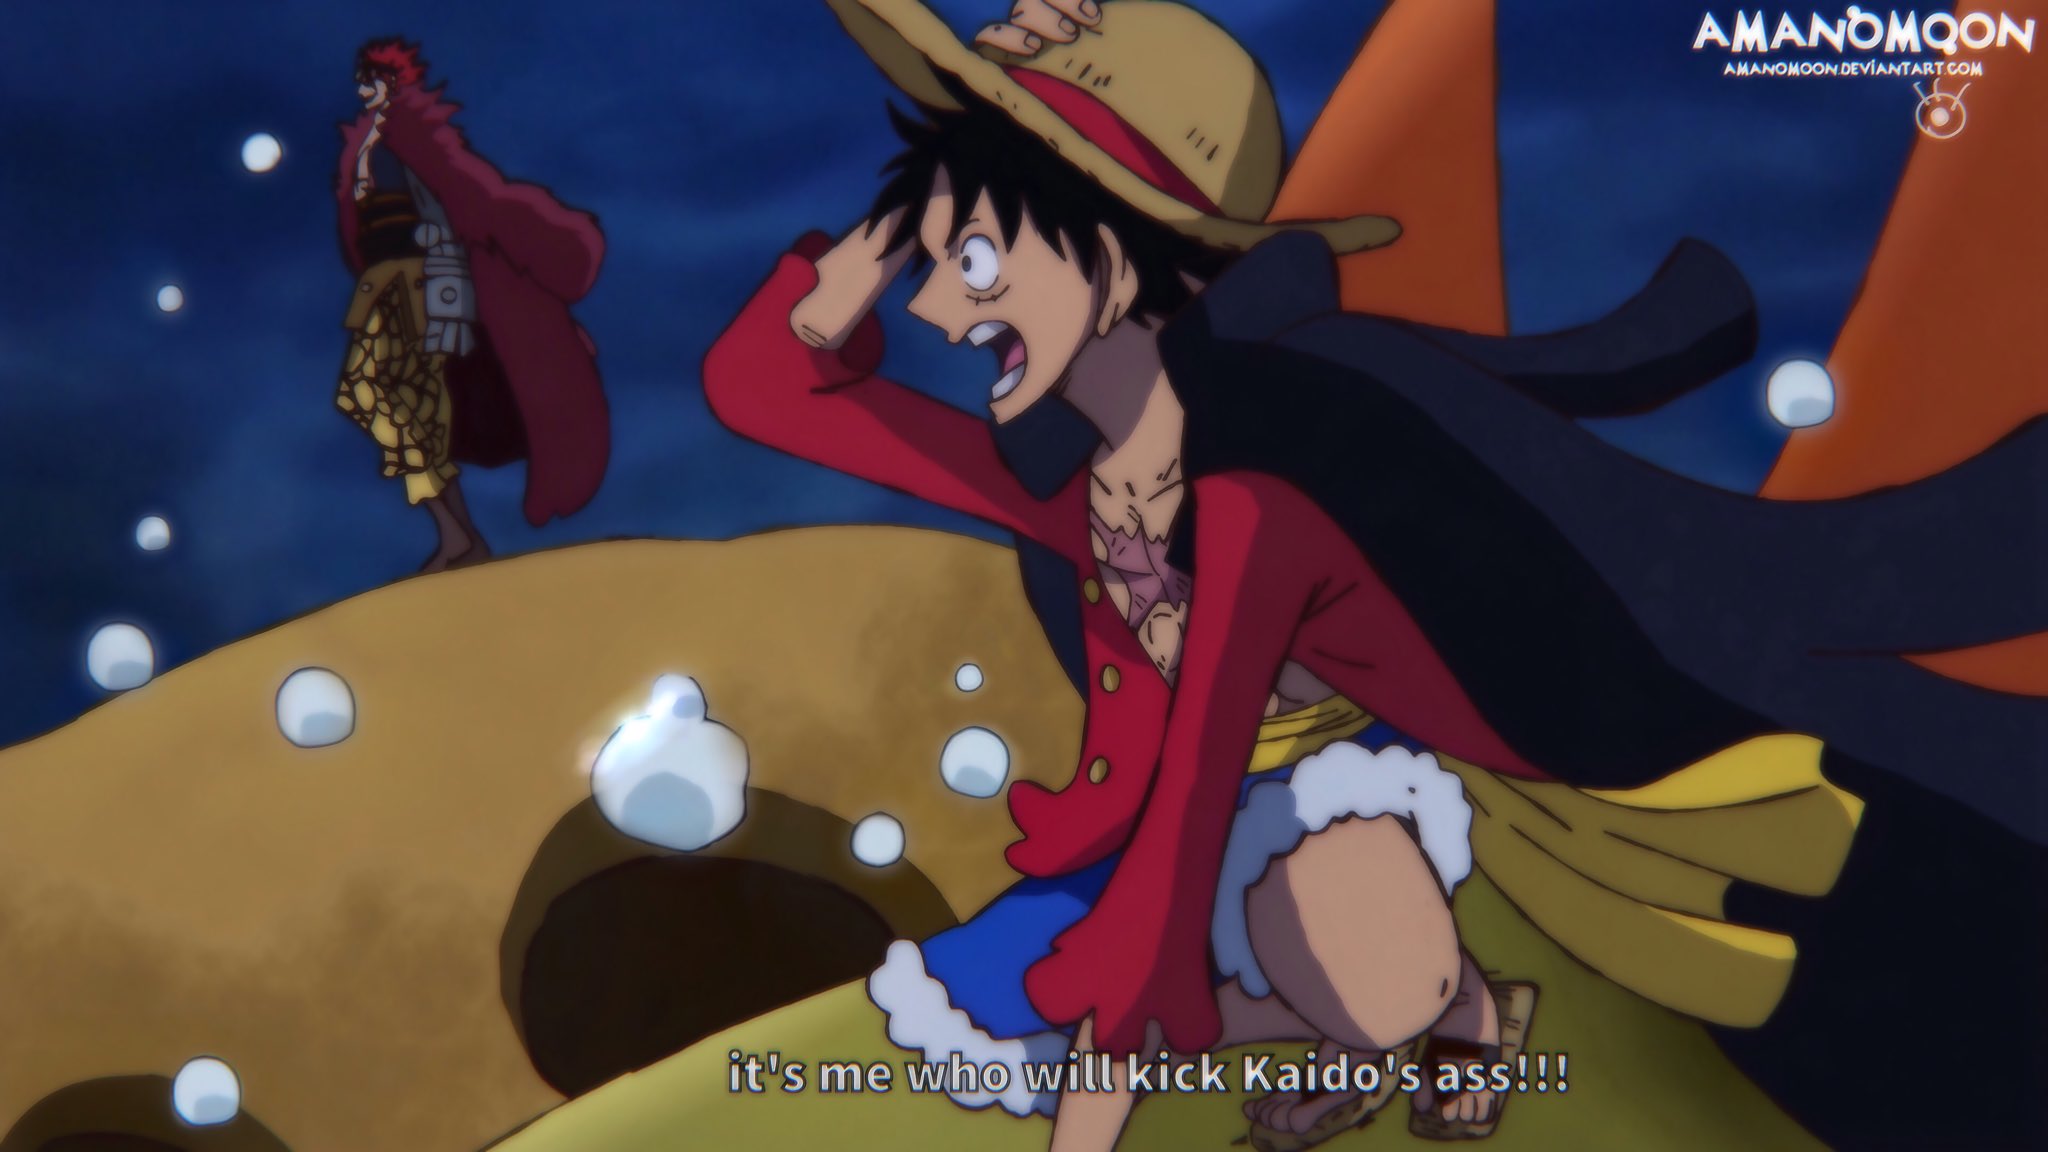 One Piece Chapter 978 Luffy Kidd Onigashima By Amanomoon On Deviantart